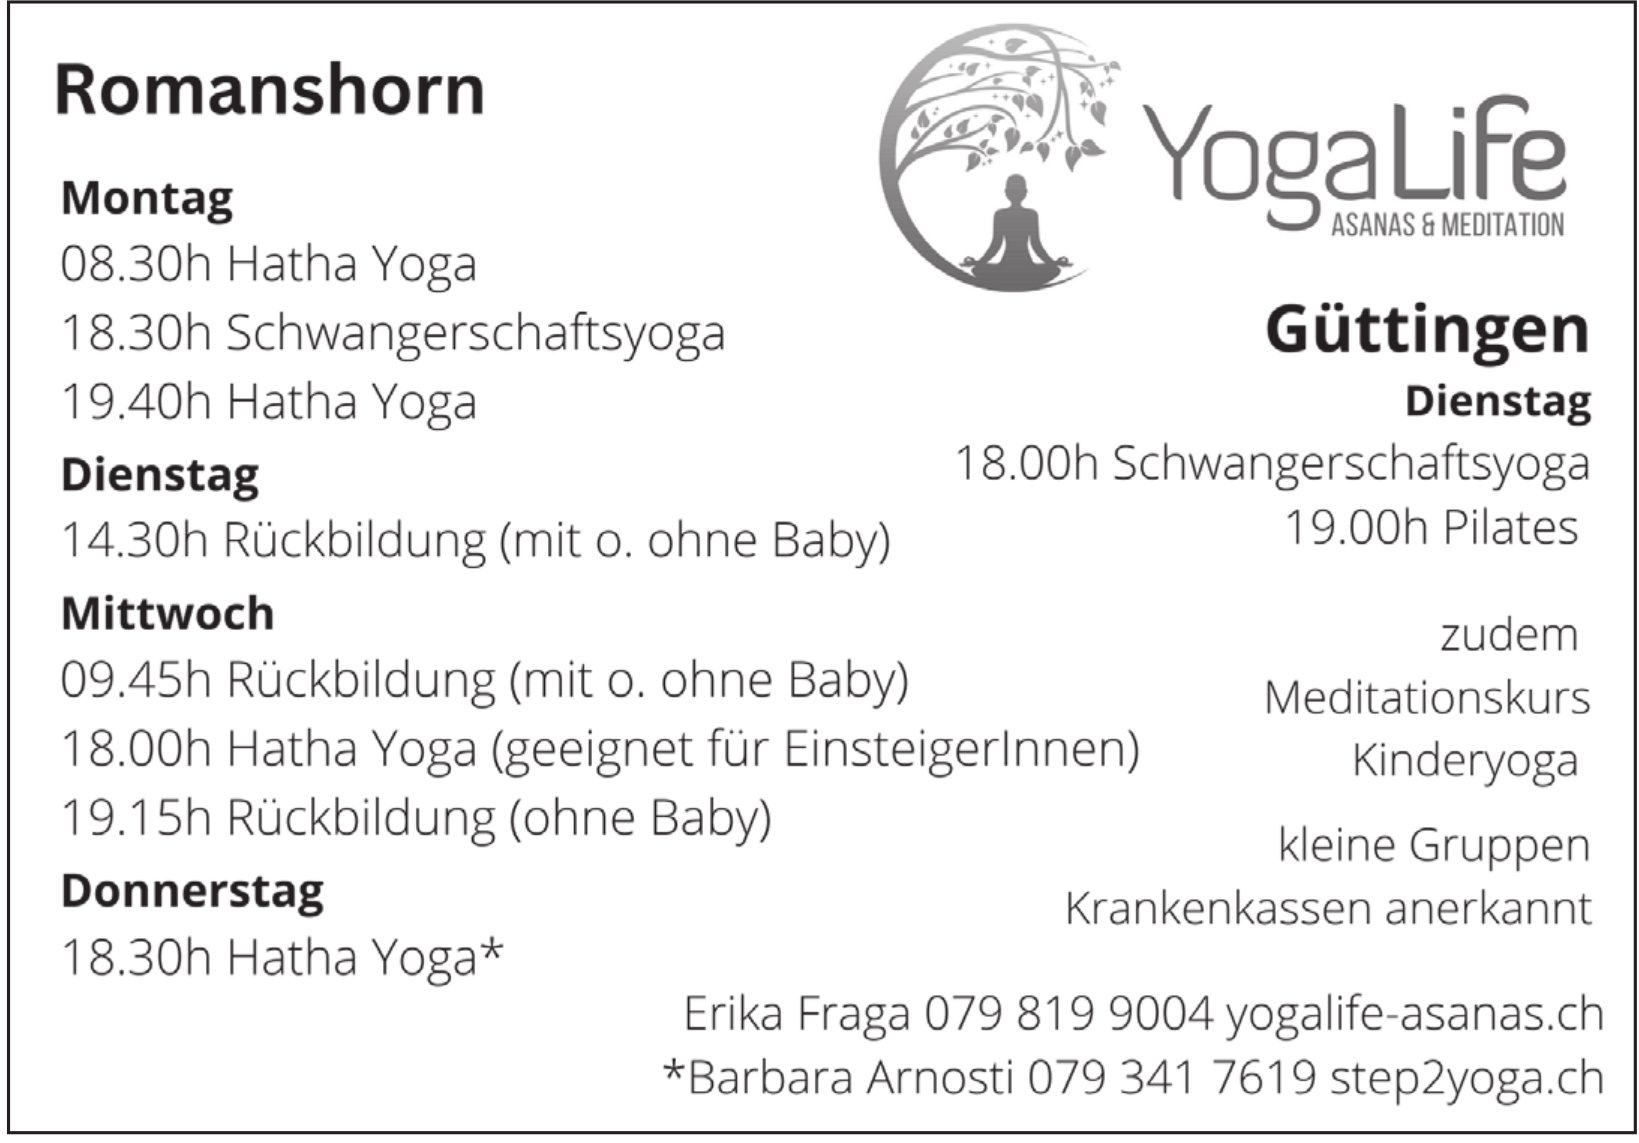 YogaLife Asanas & Meditation, Güttingen